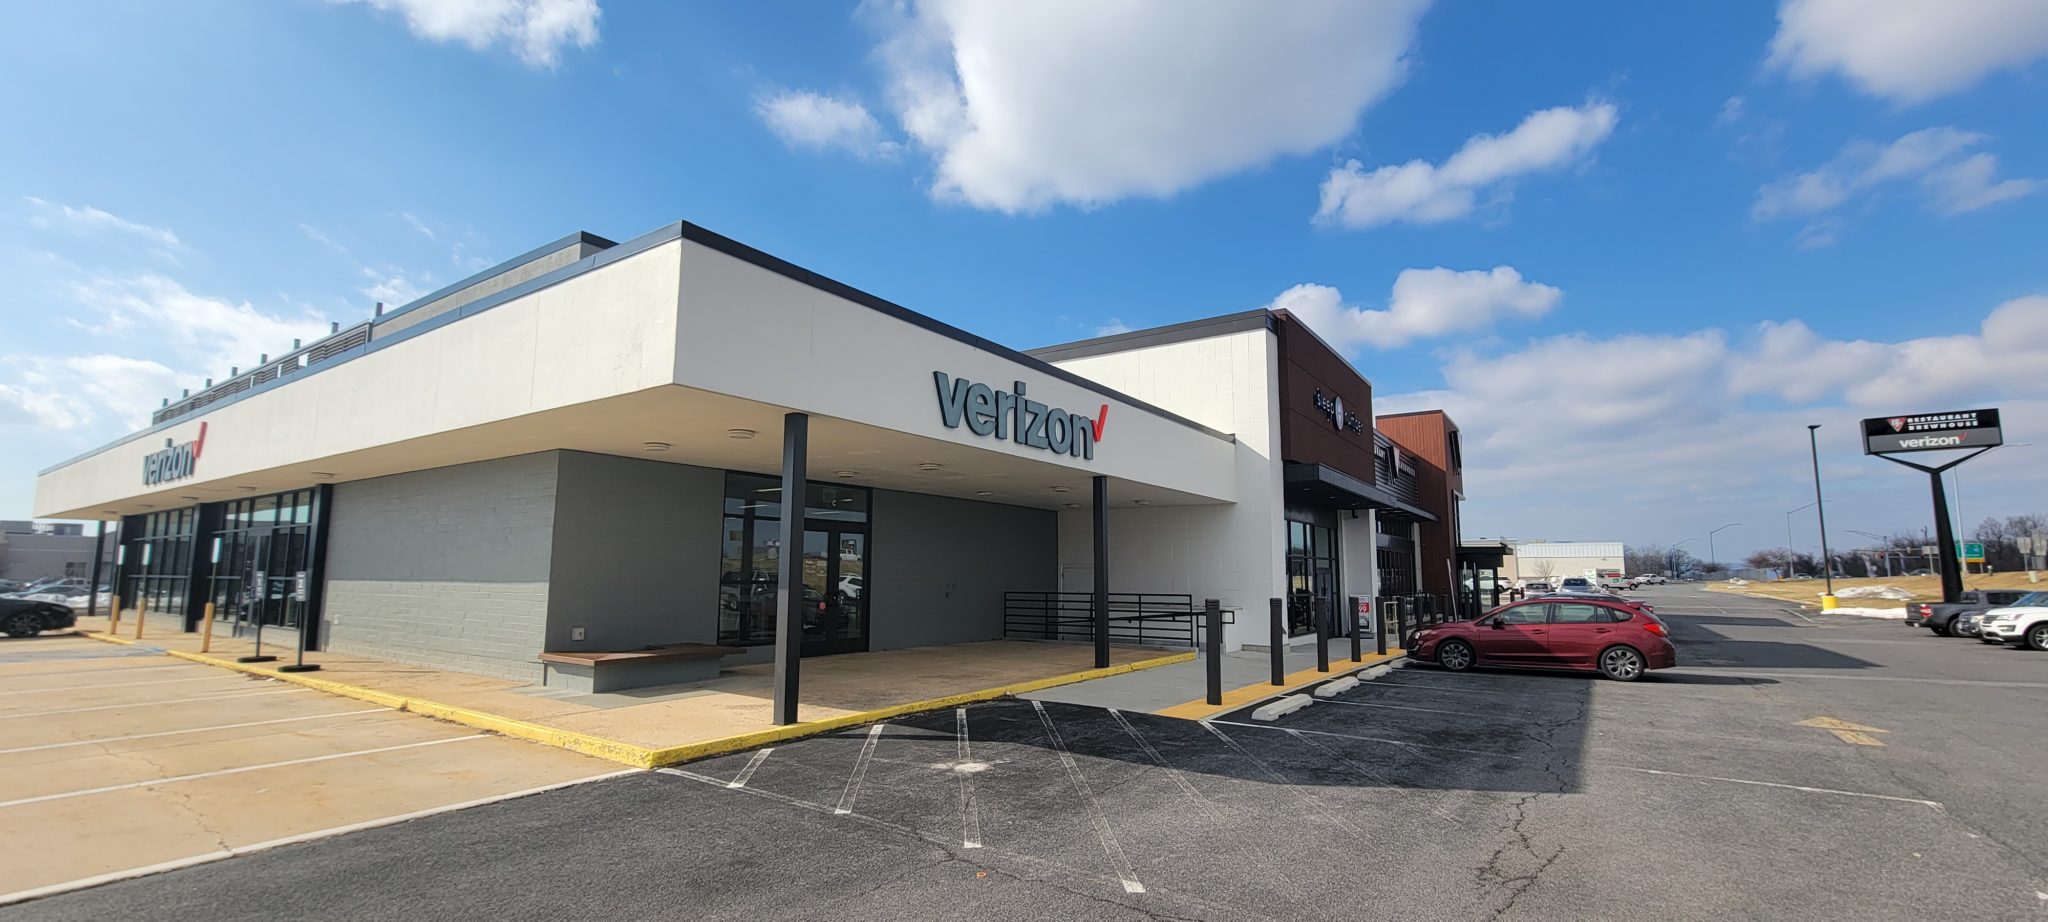 Hagerstown Maryland: Verizon Store